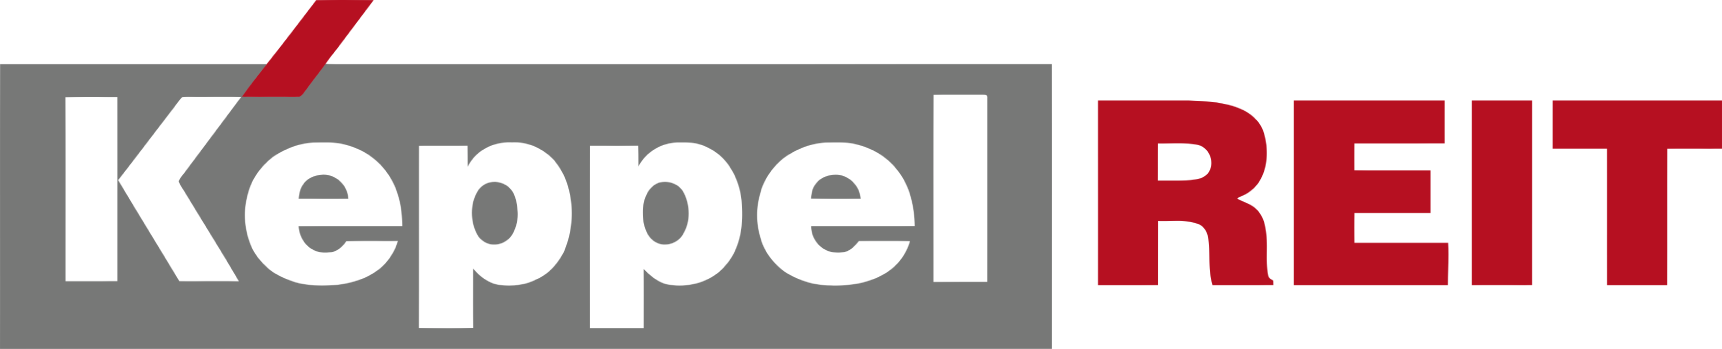 Keppel REIT
 logo large (transparent PNG)